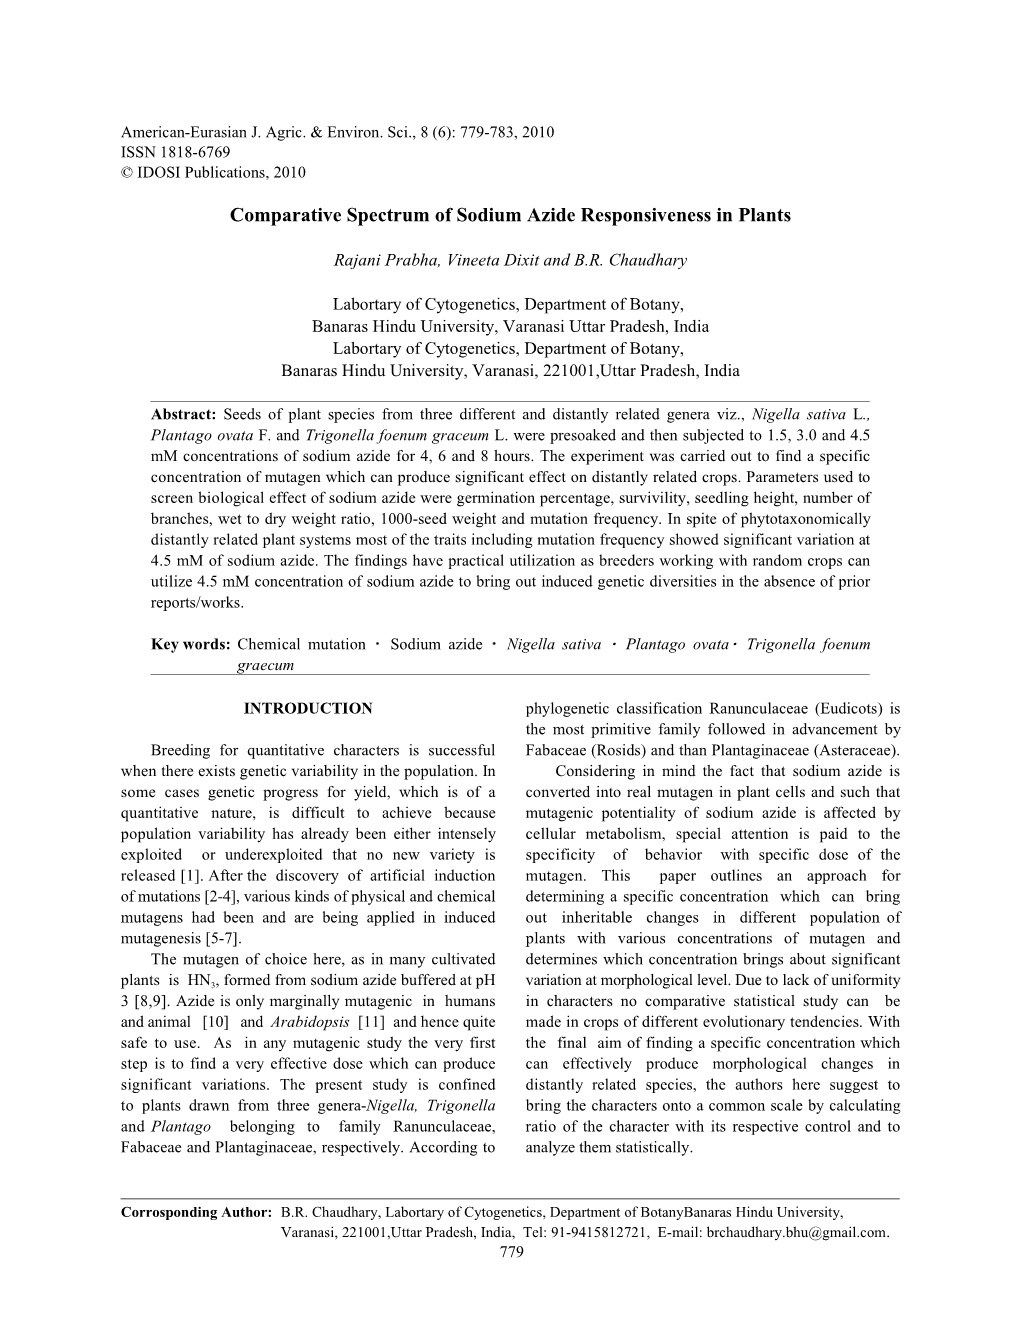 Comparative Spectrum of Sodium Azide Responsiveness in Plants